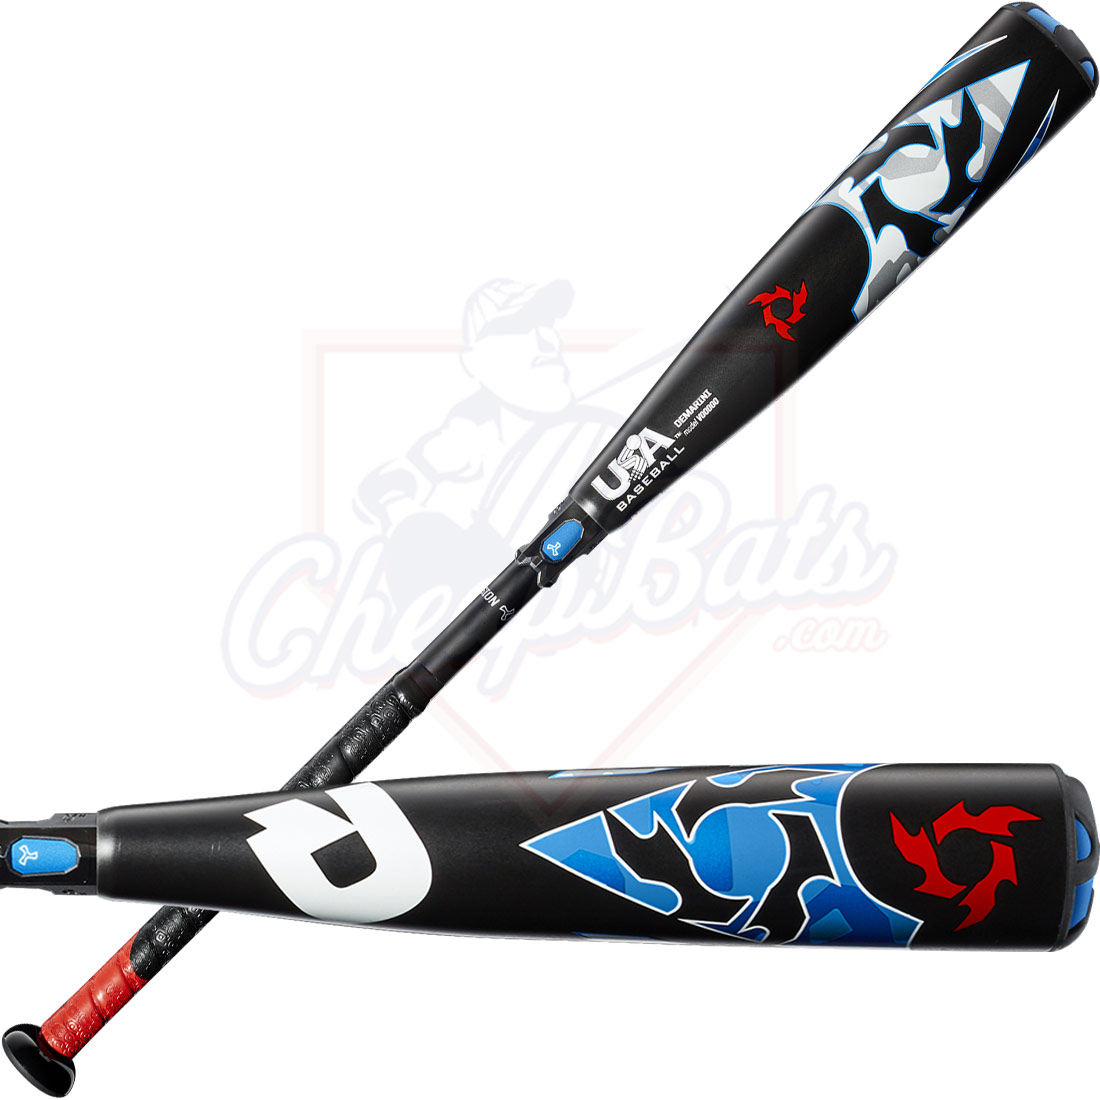 DeMarini 2020 Voodoo Balanced -3 2 5/8 BBCOR Baseball Bat Series